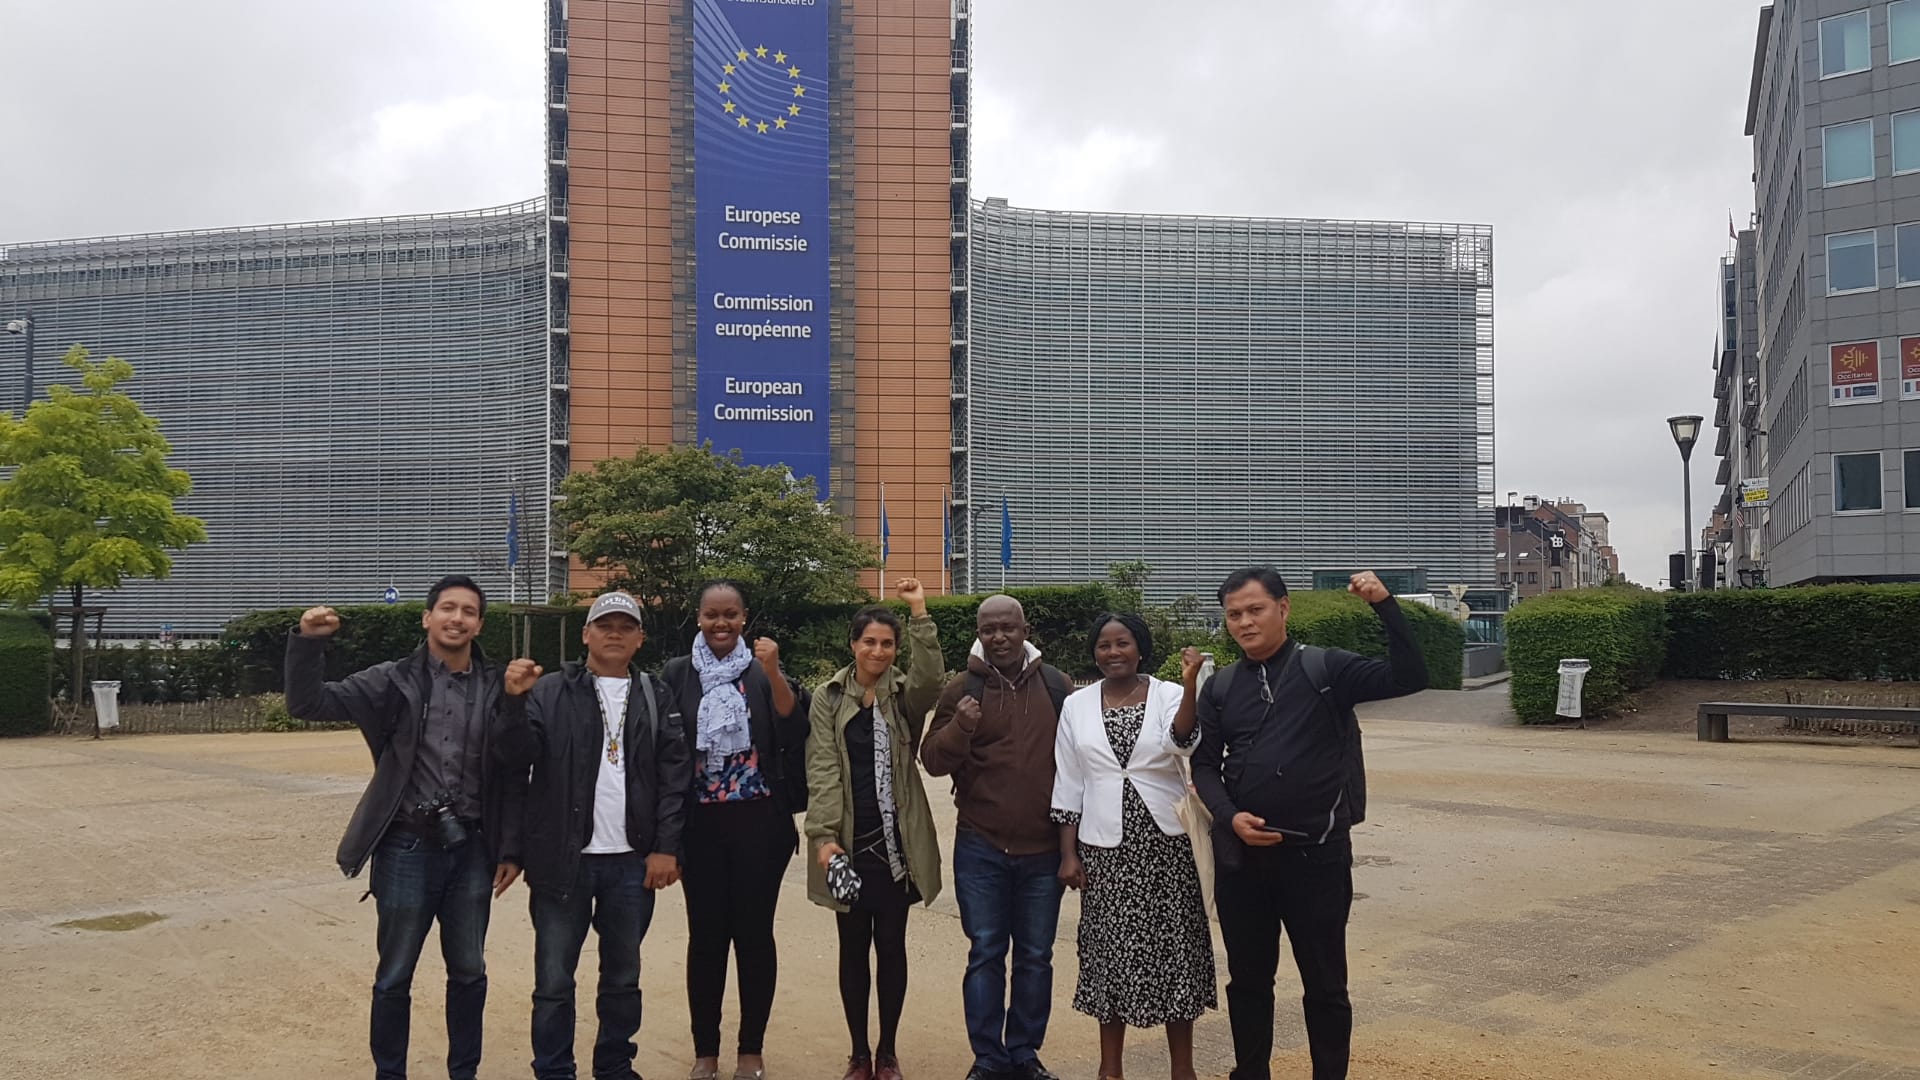 Lobby tour participants outside the EU Brussels